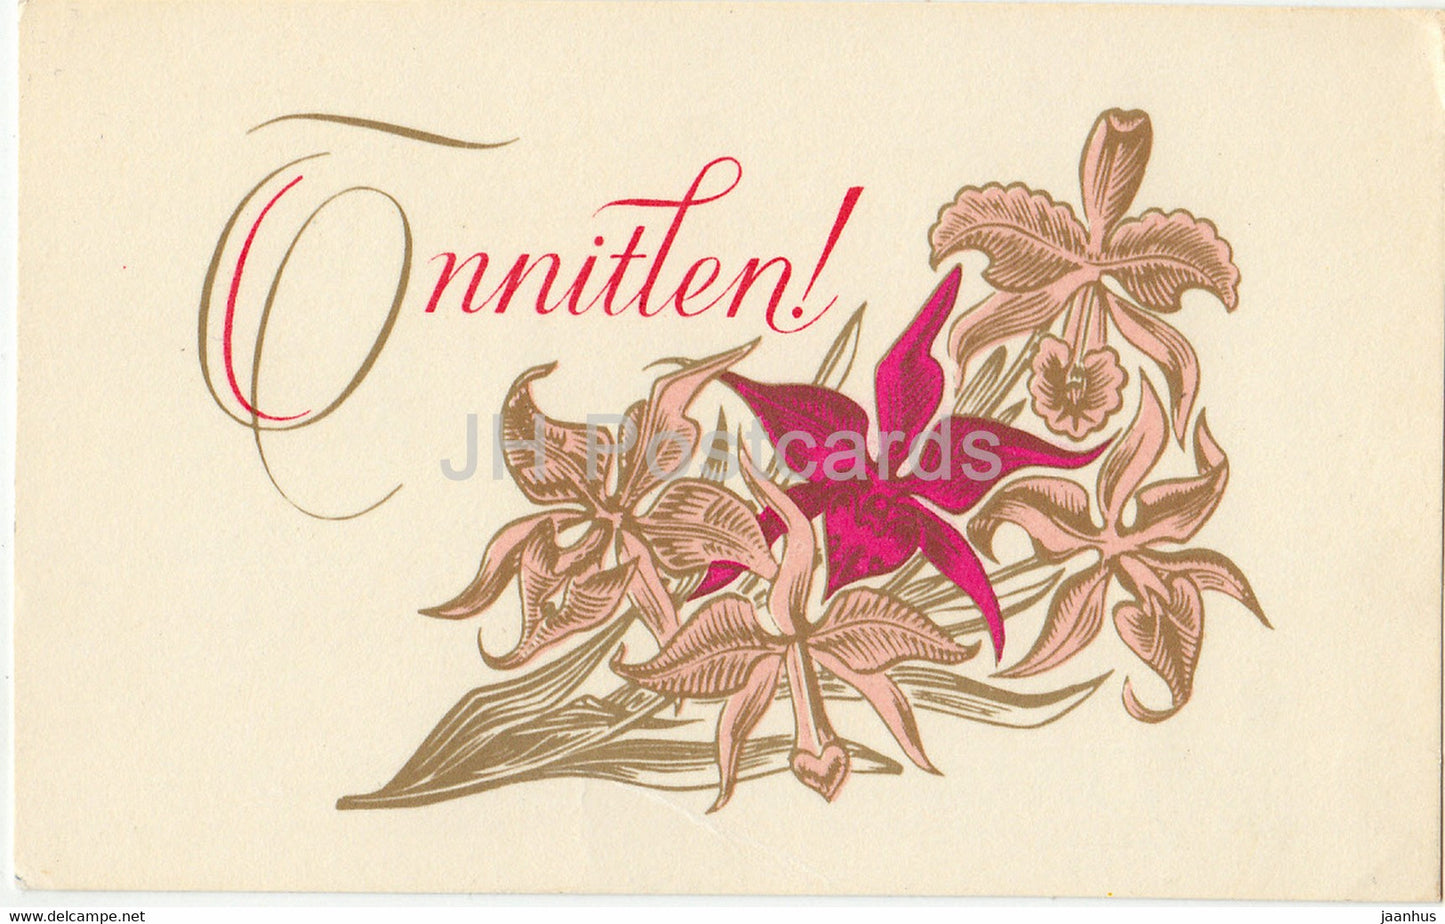 Bithday greeting Card by P. Luhtein - flowers - 1974 - Estonia USSR - unused - JH Postcards